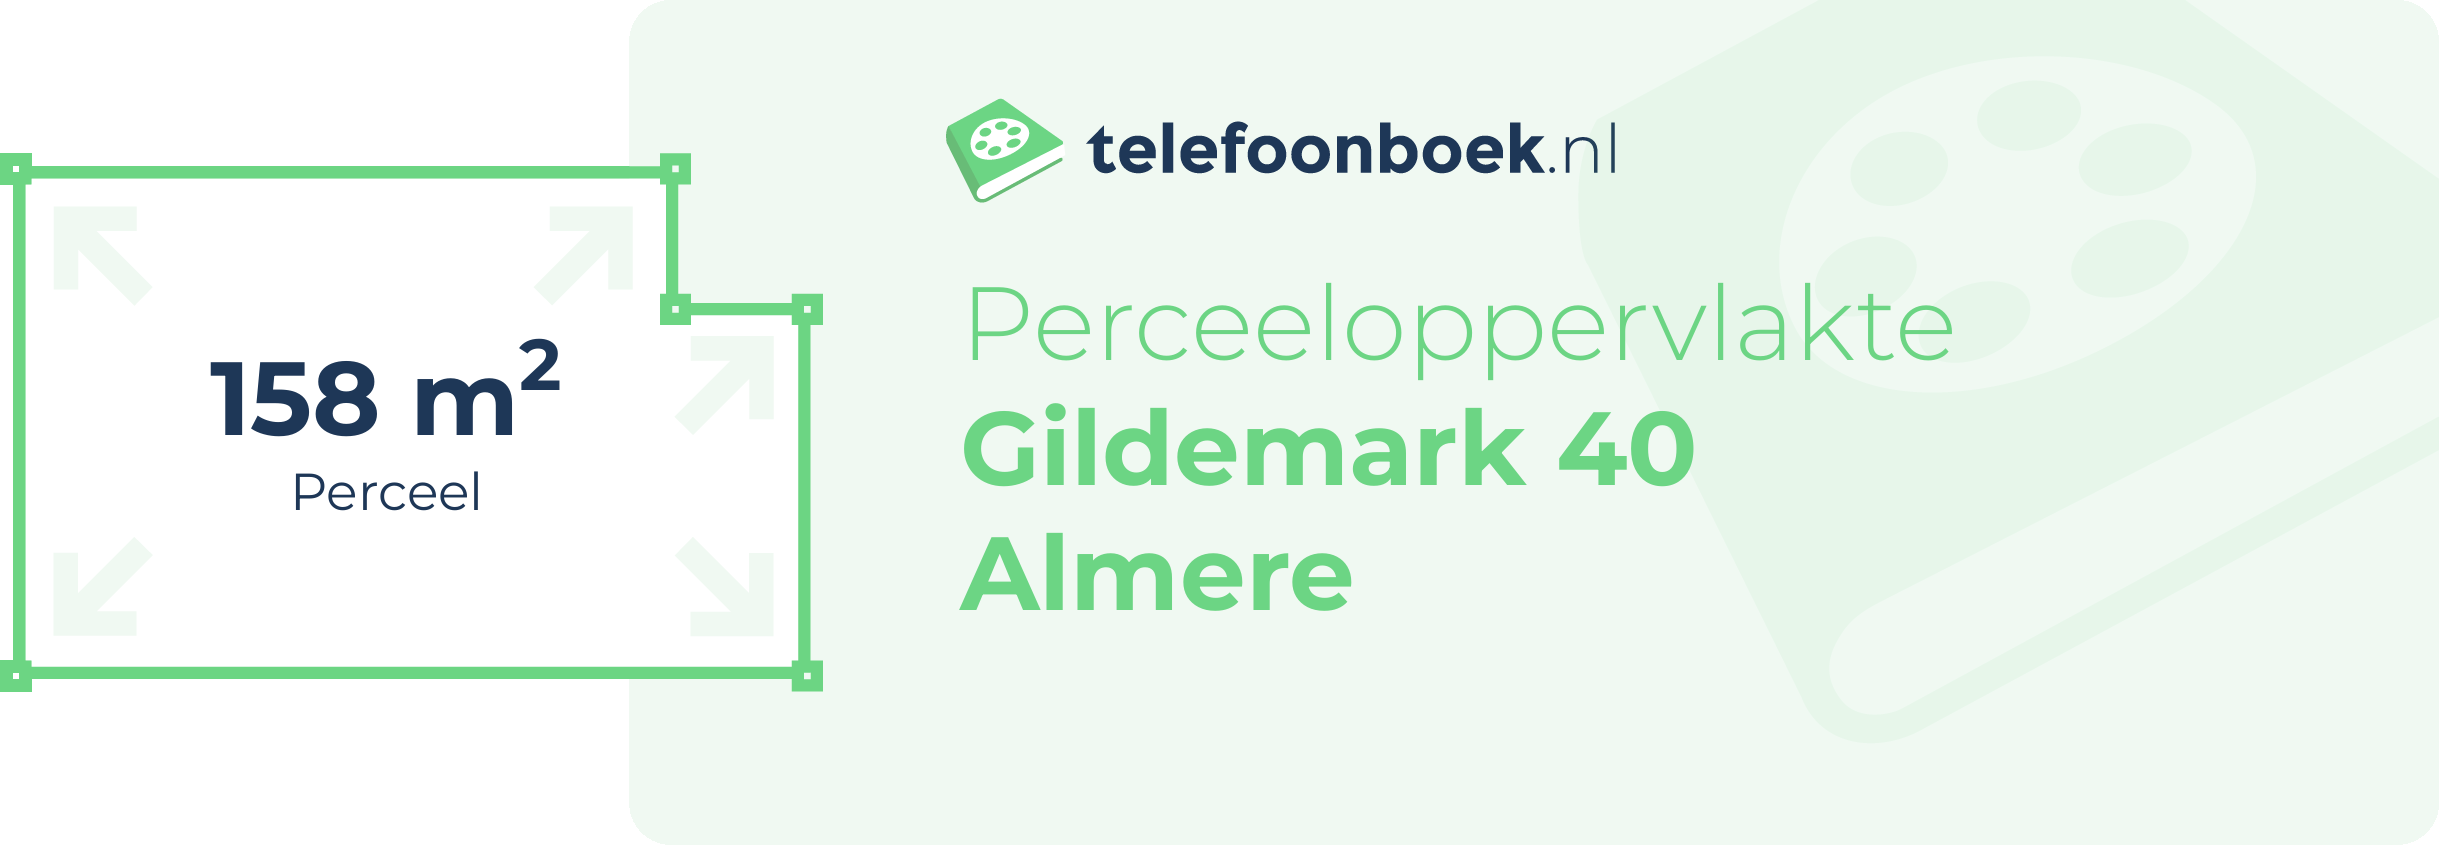 Perceeloppervlakte Gildemark 40 Almere